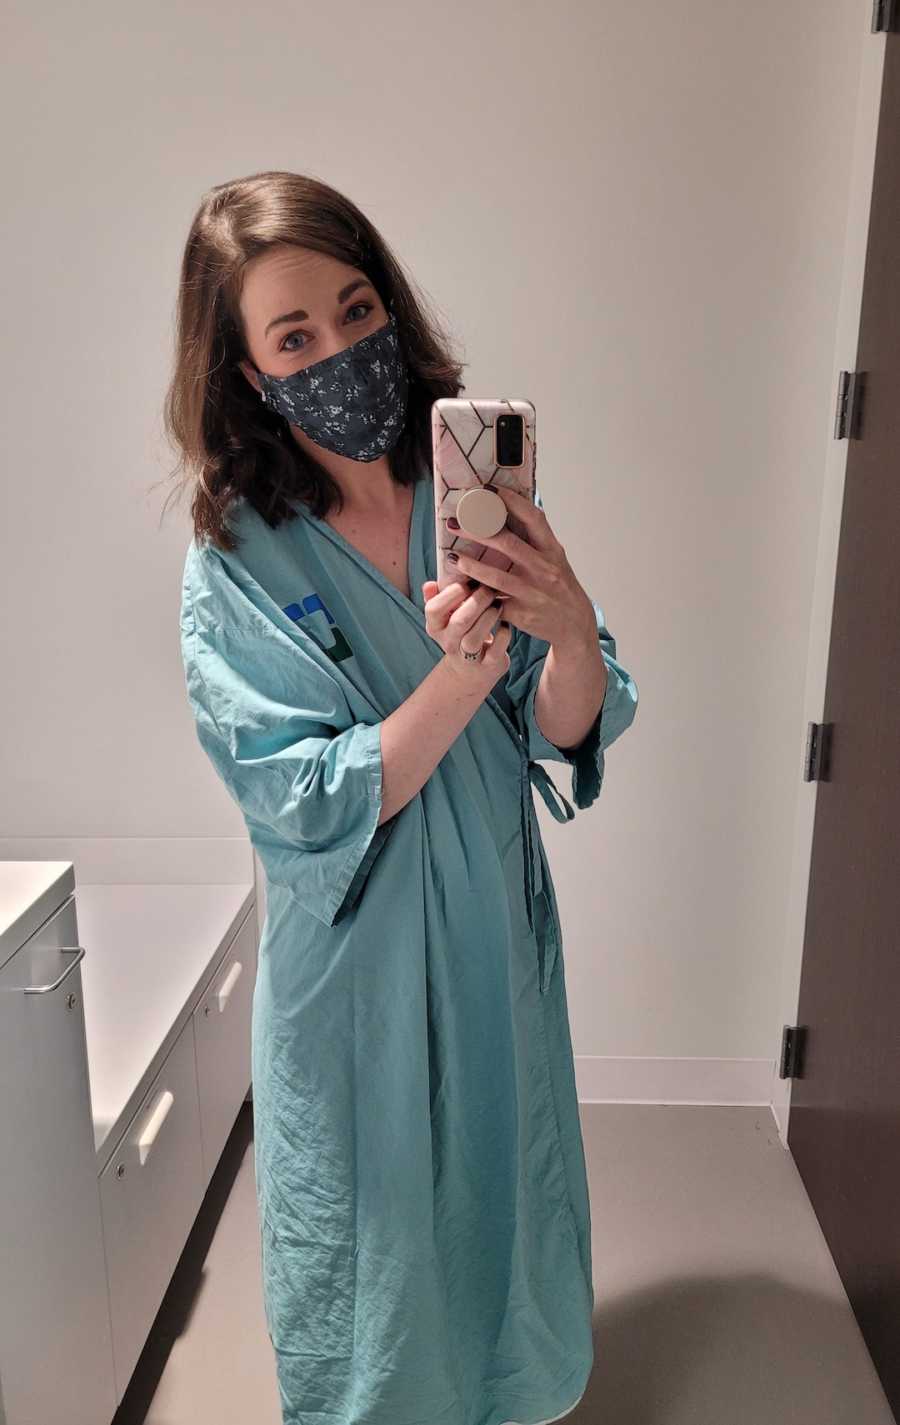 woman in hospital gown taking a mirror selfie